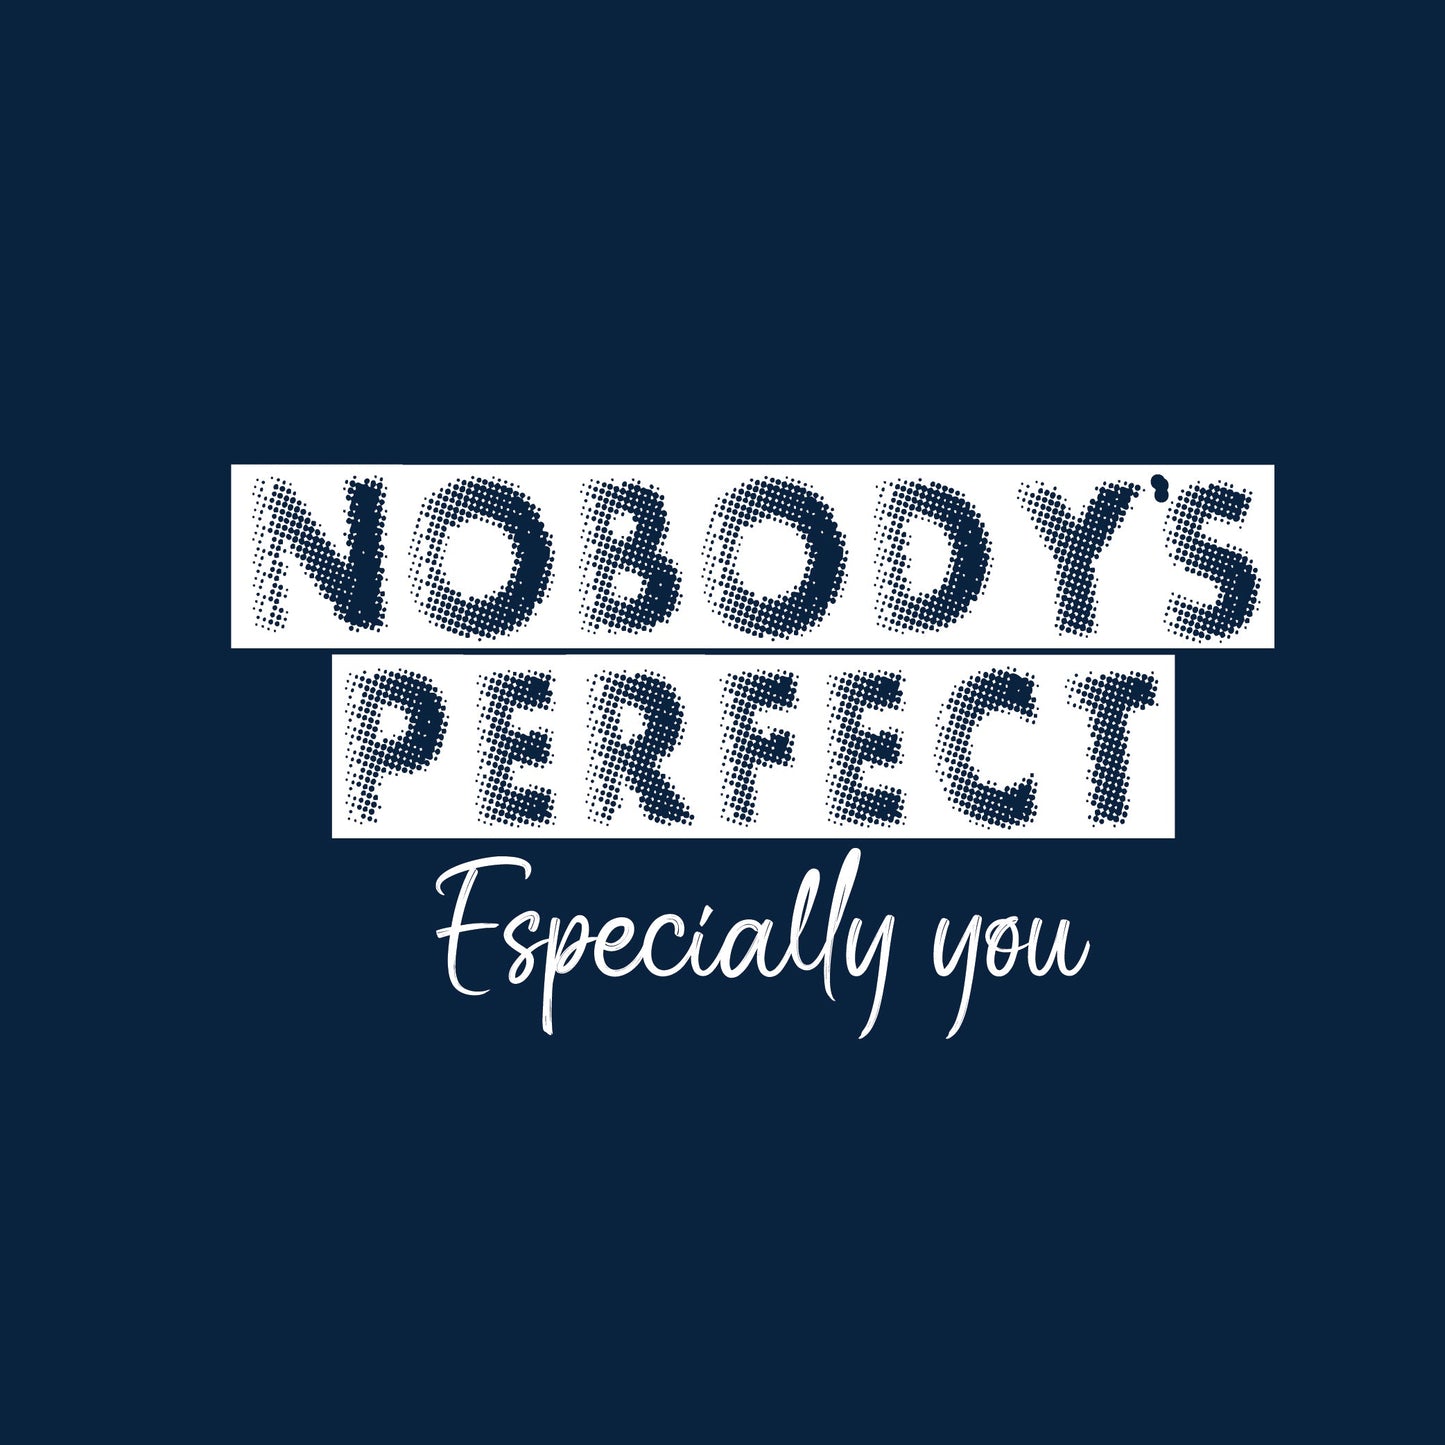 Nobody's perfect especially you